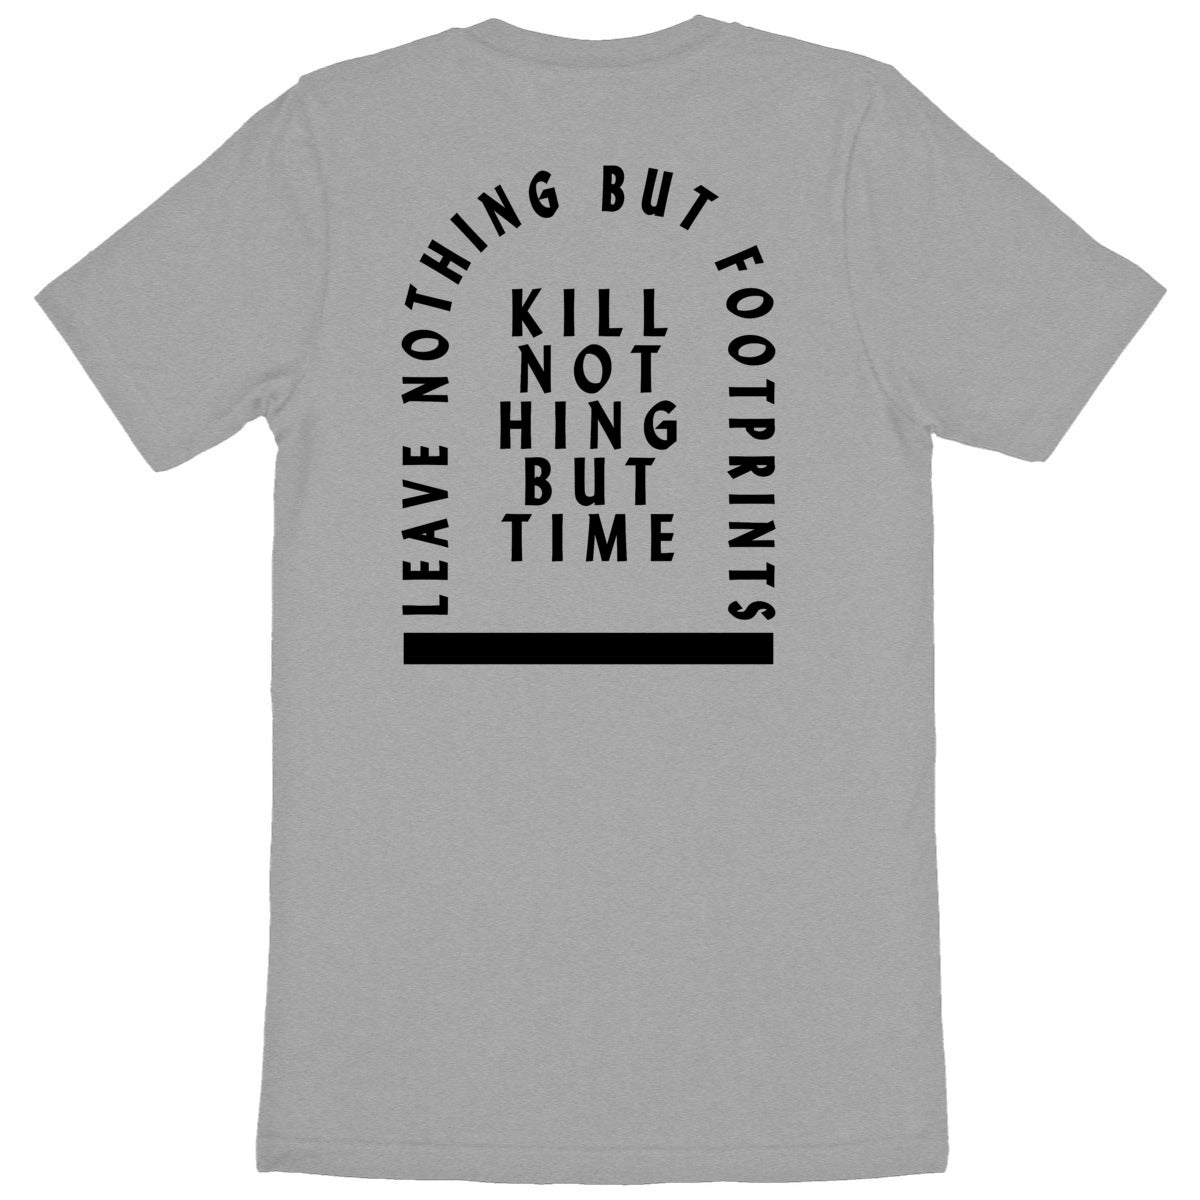 Kill nothing but time - Unisex Organic T-shirt